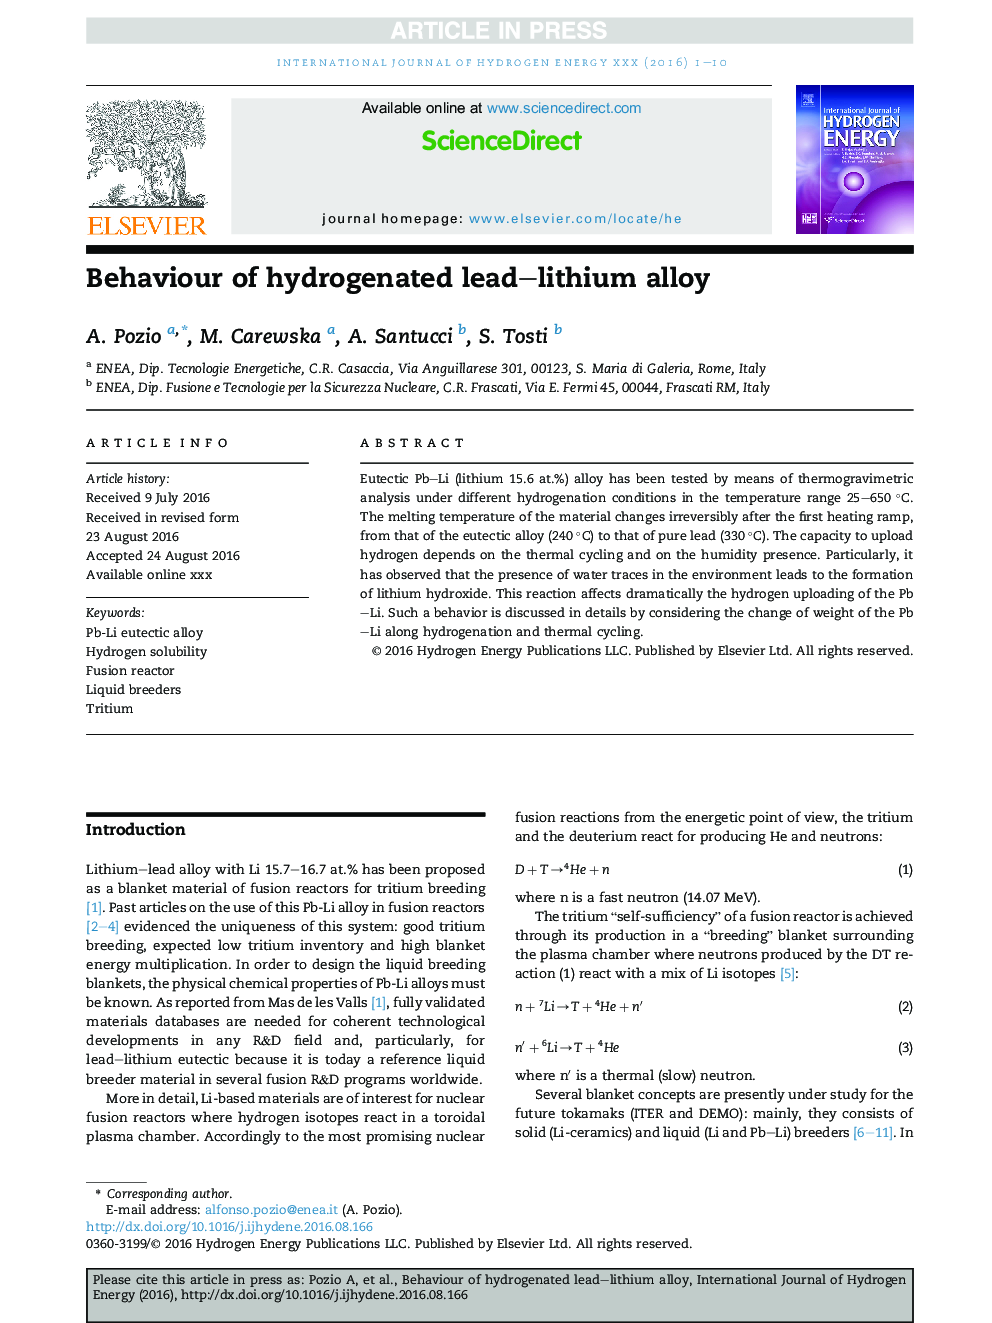 Behaviour of hydrogenated lead-lithium alloy